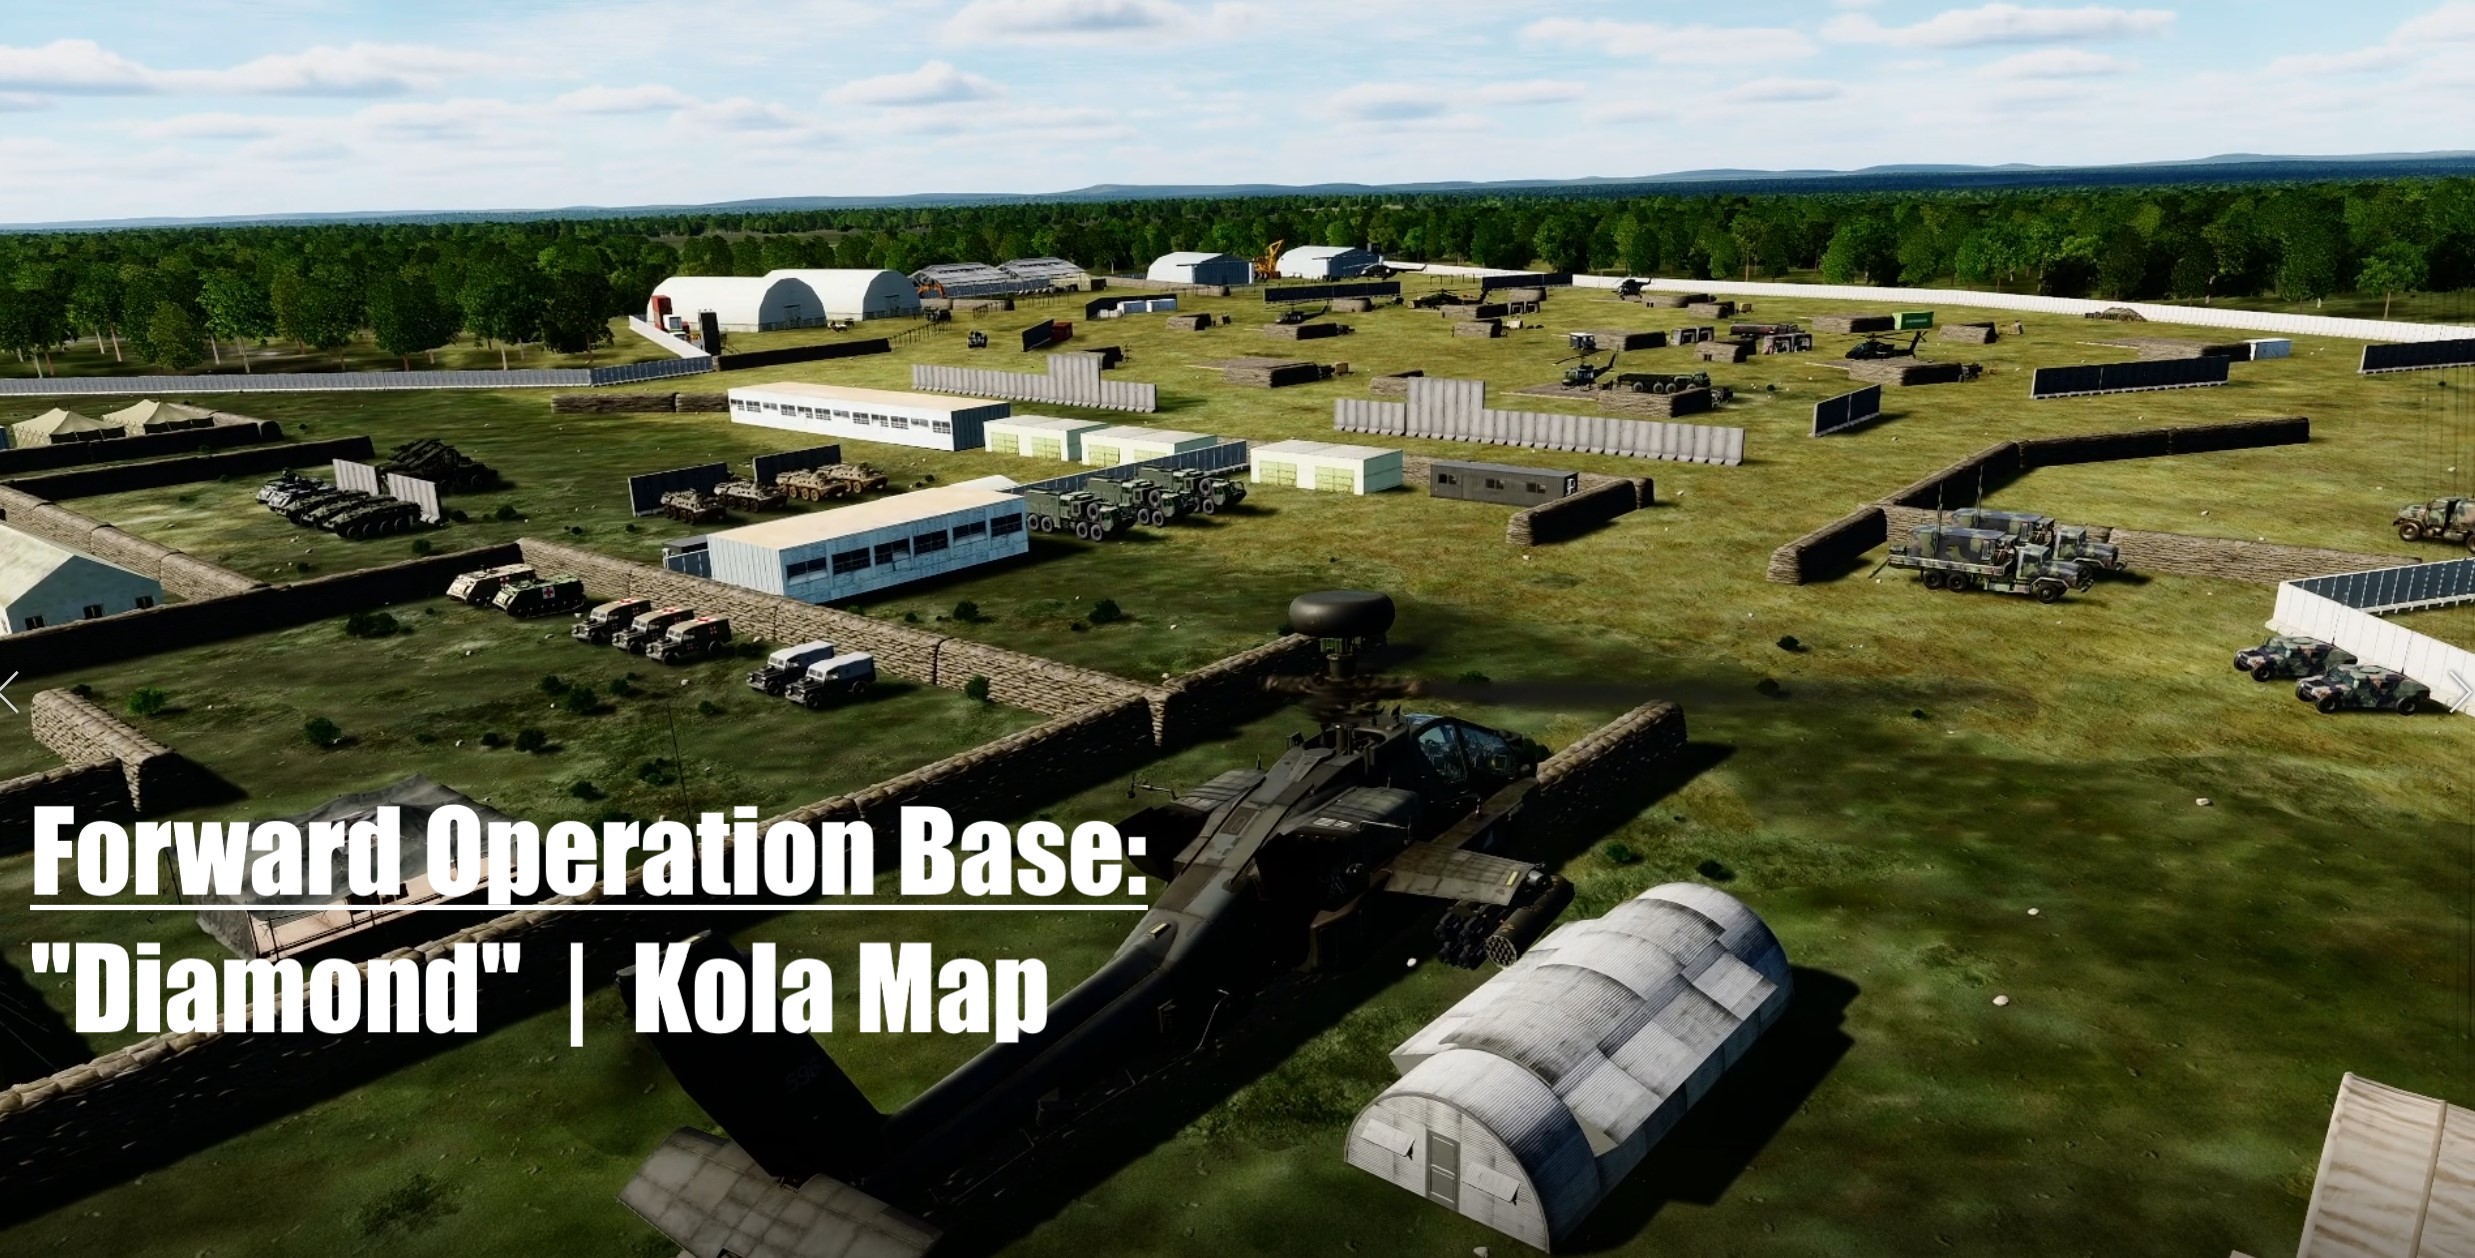 DCS Kola Map | Forward Operation Base "Diamond" (FULL BASE)